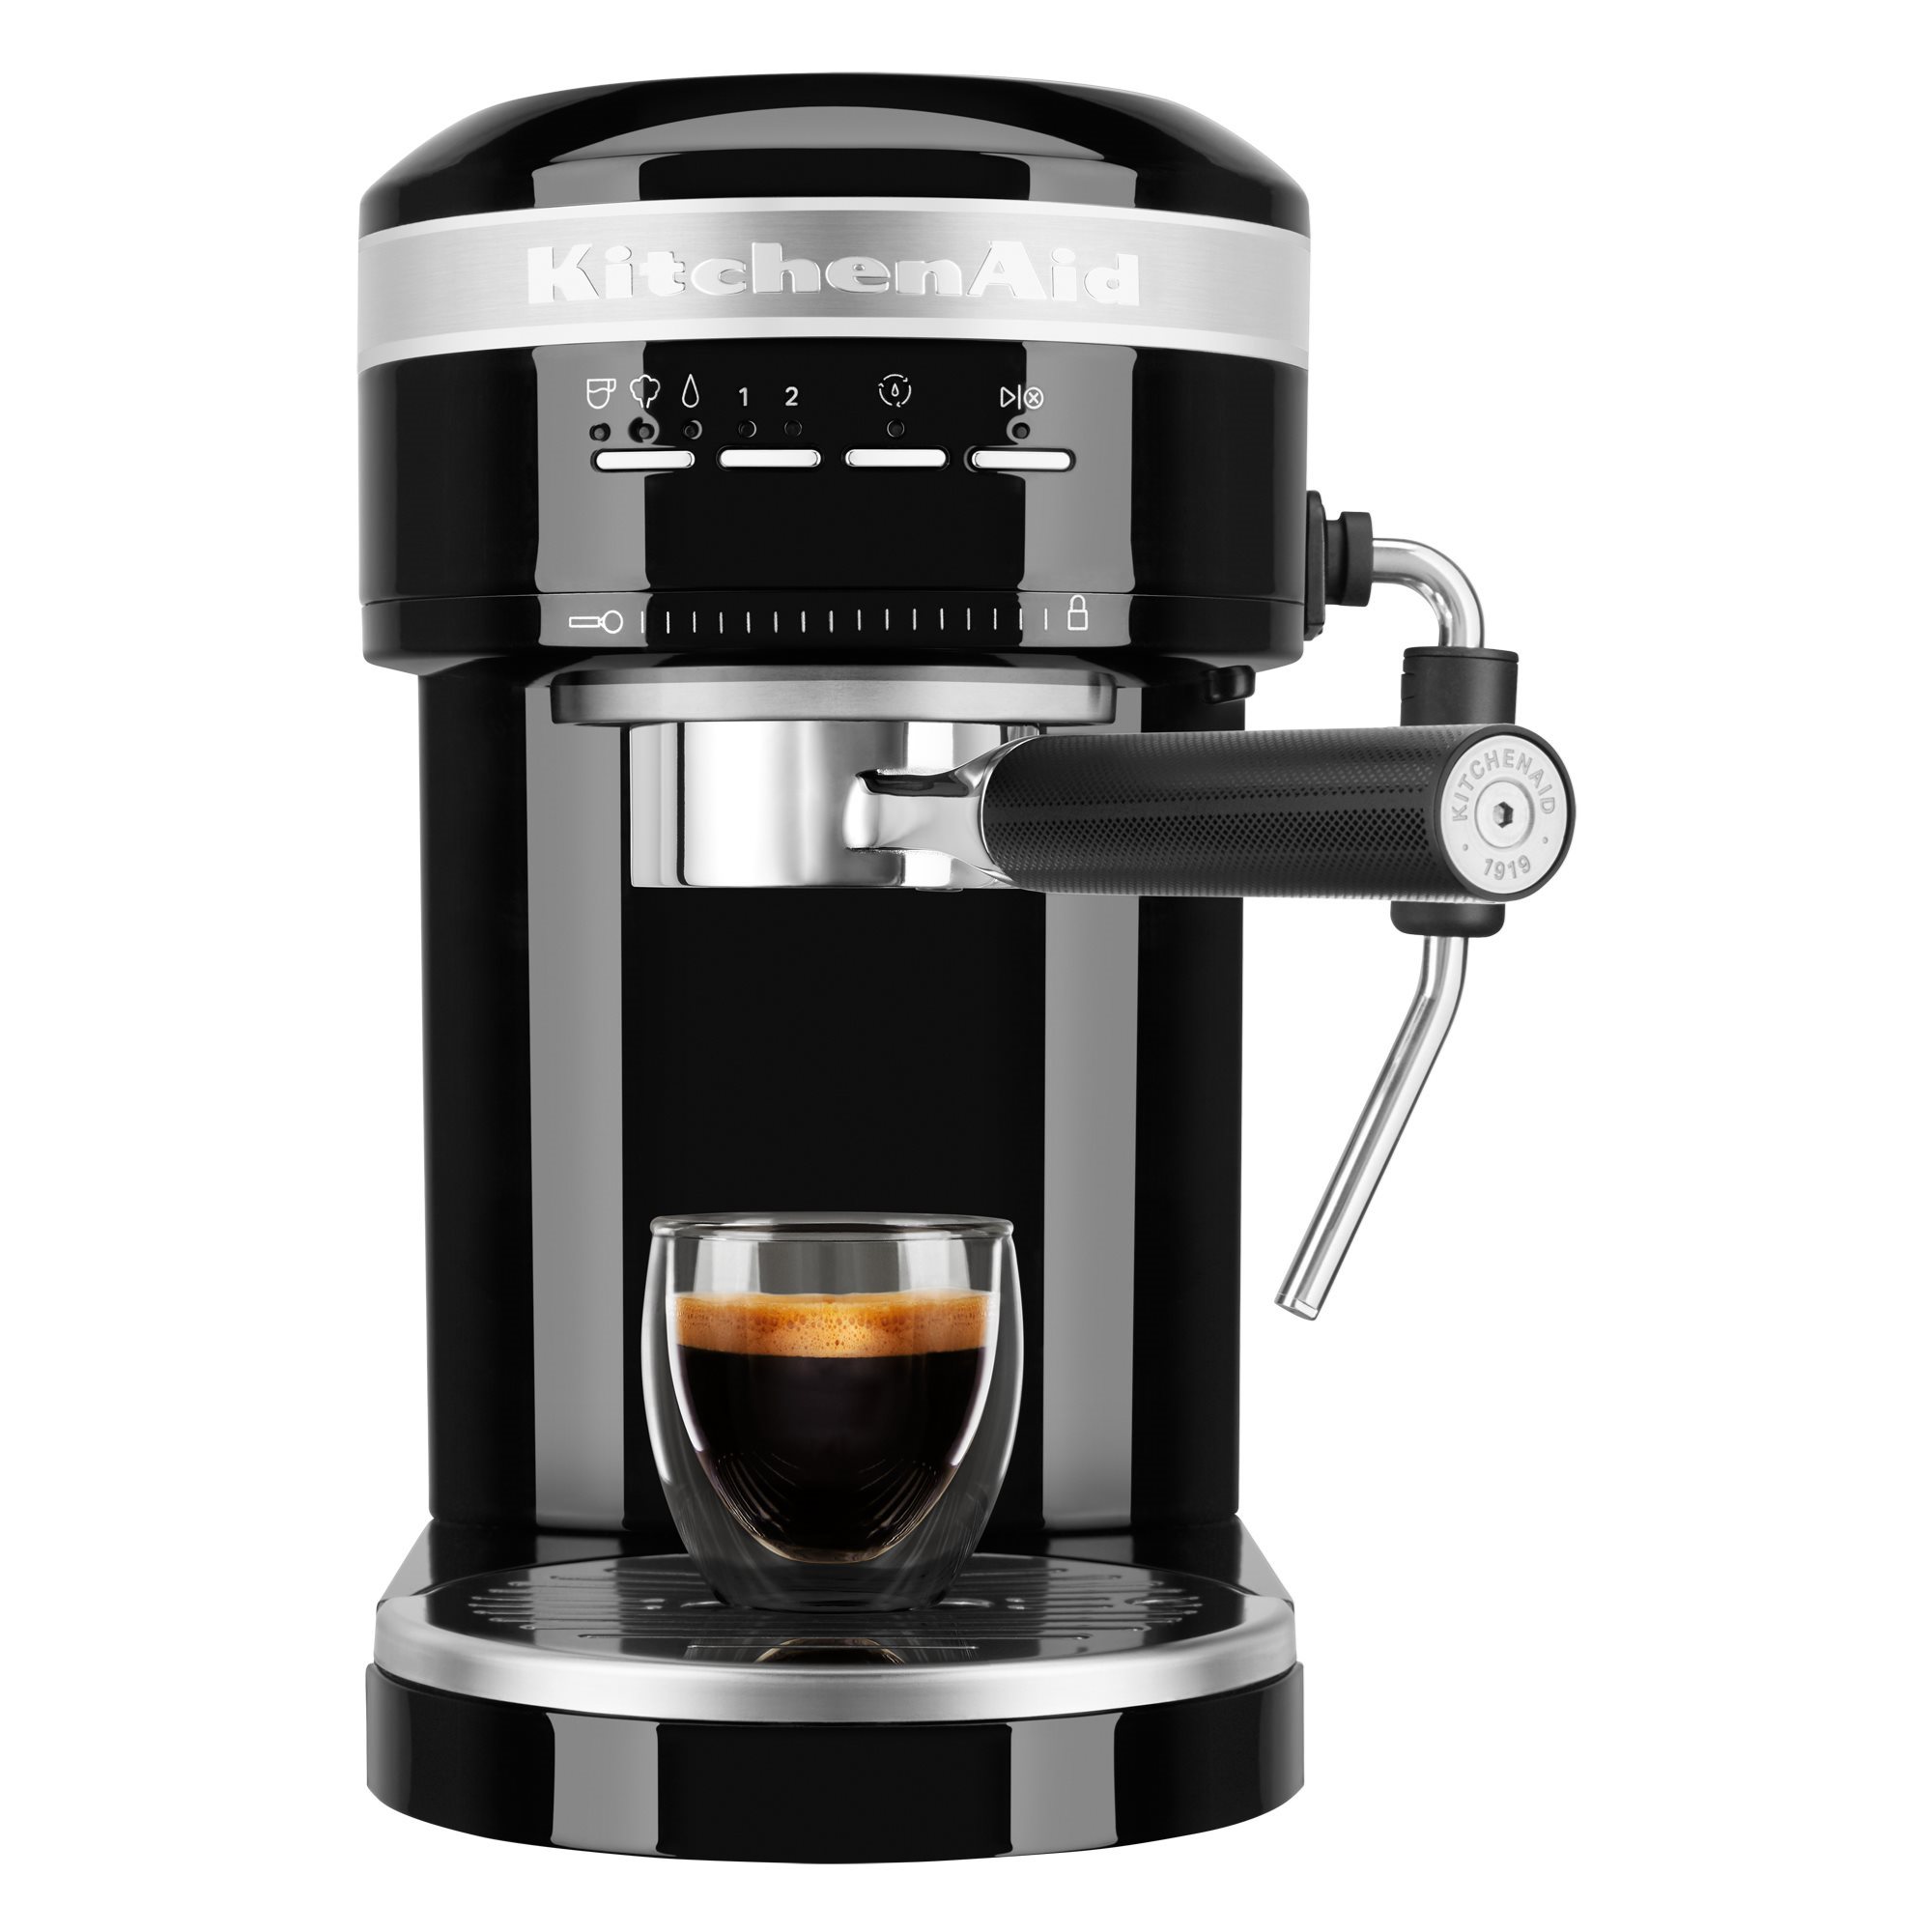 Artisan electric espresso machine, 1470W, Onyx Black color